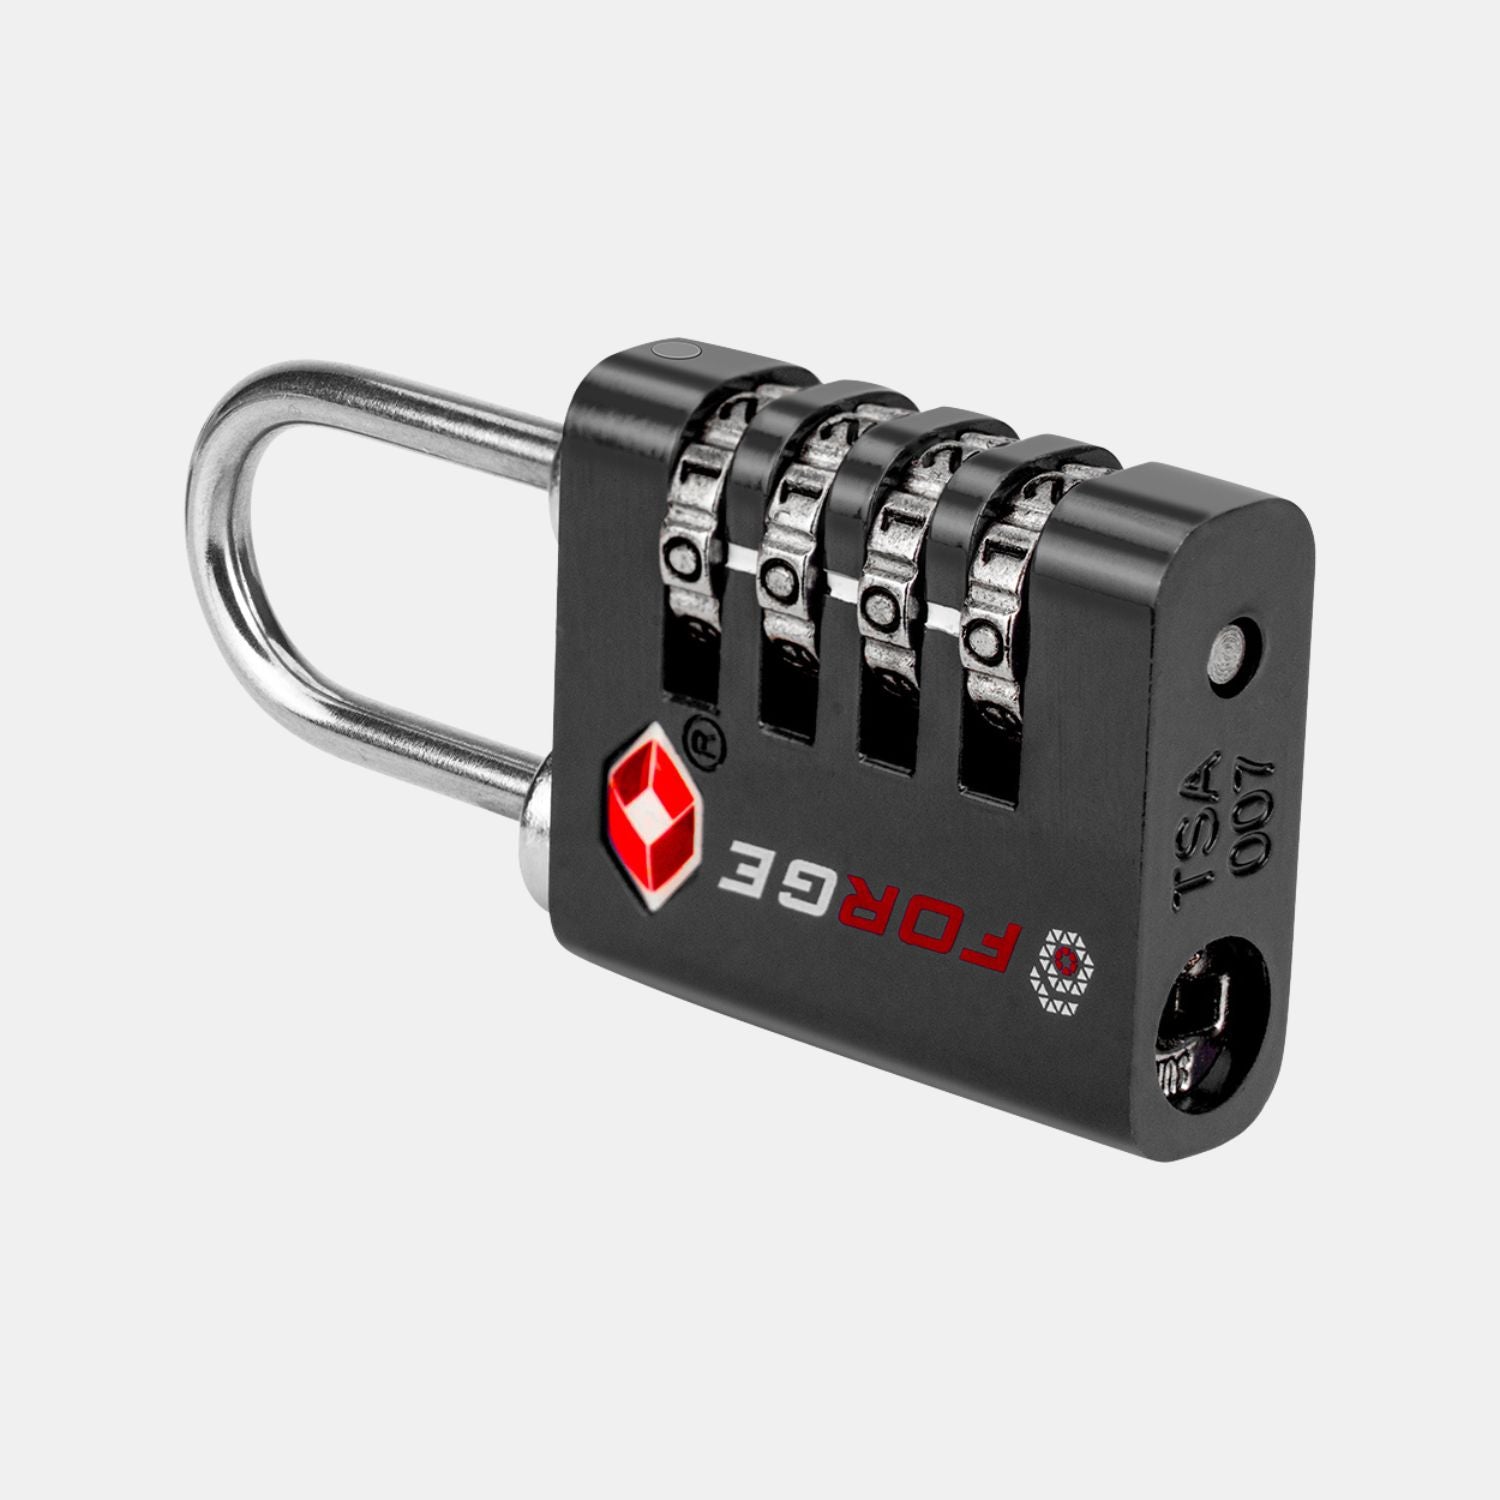 Dual-Opening TSA Approved Luggage Lock: Key or Combination Access, Heavy Duty. 6 Black Locks